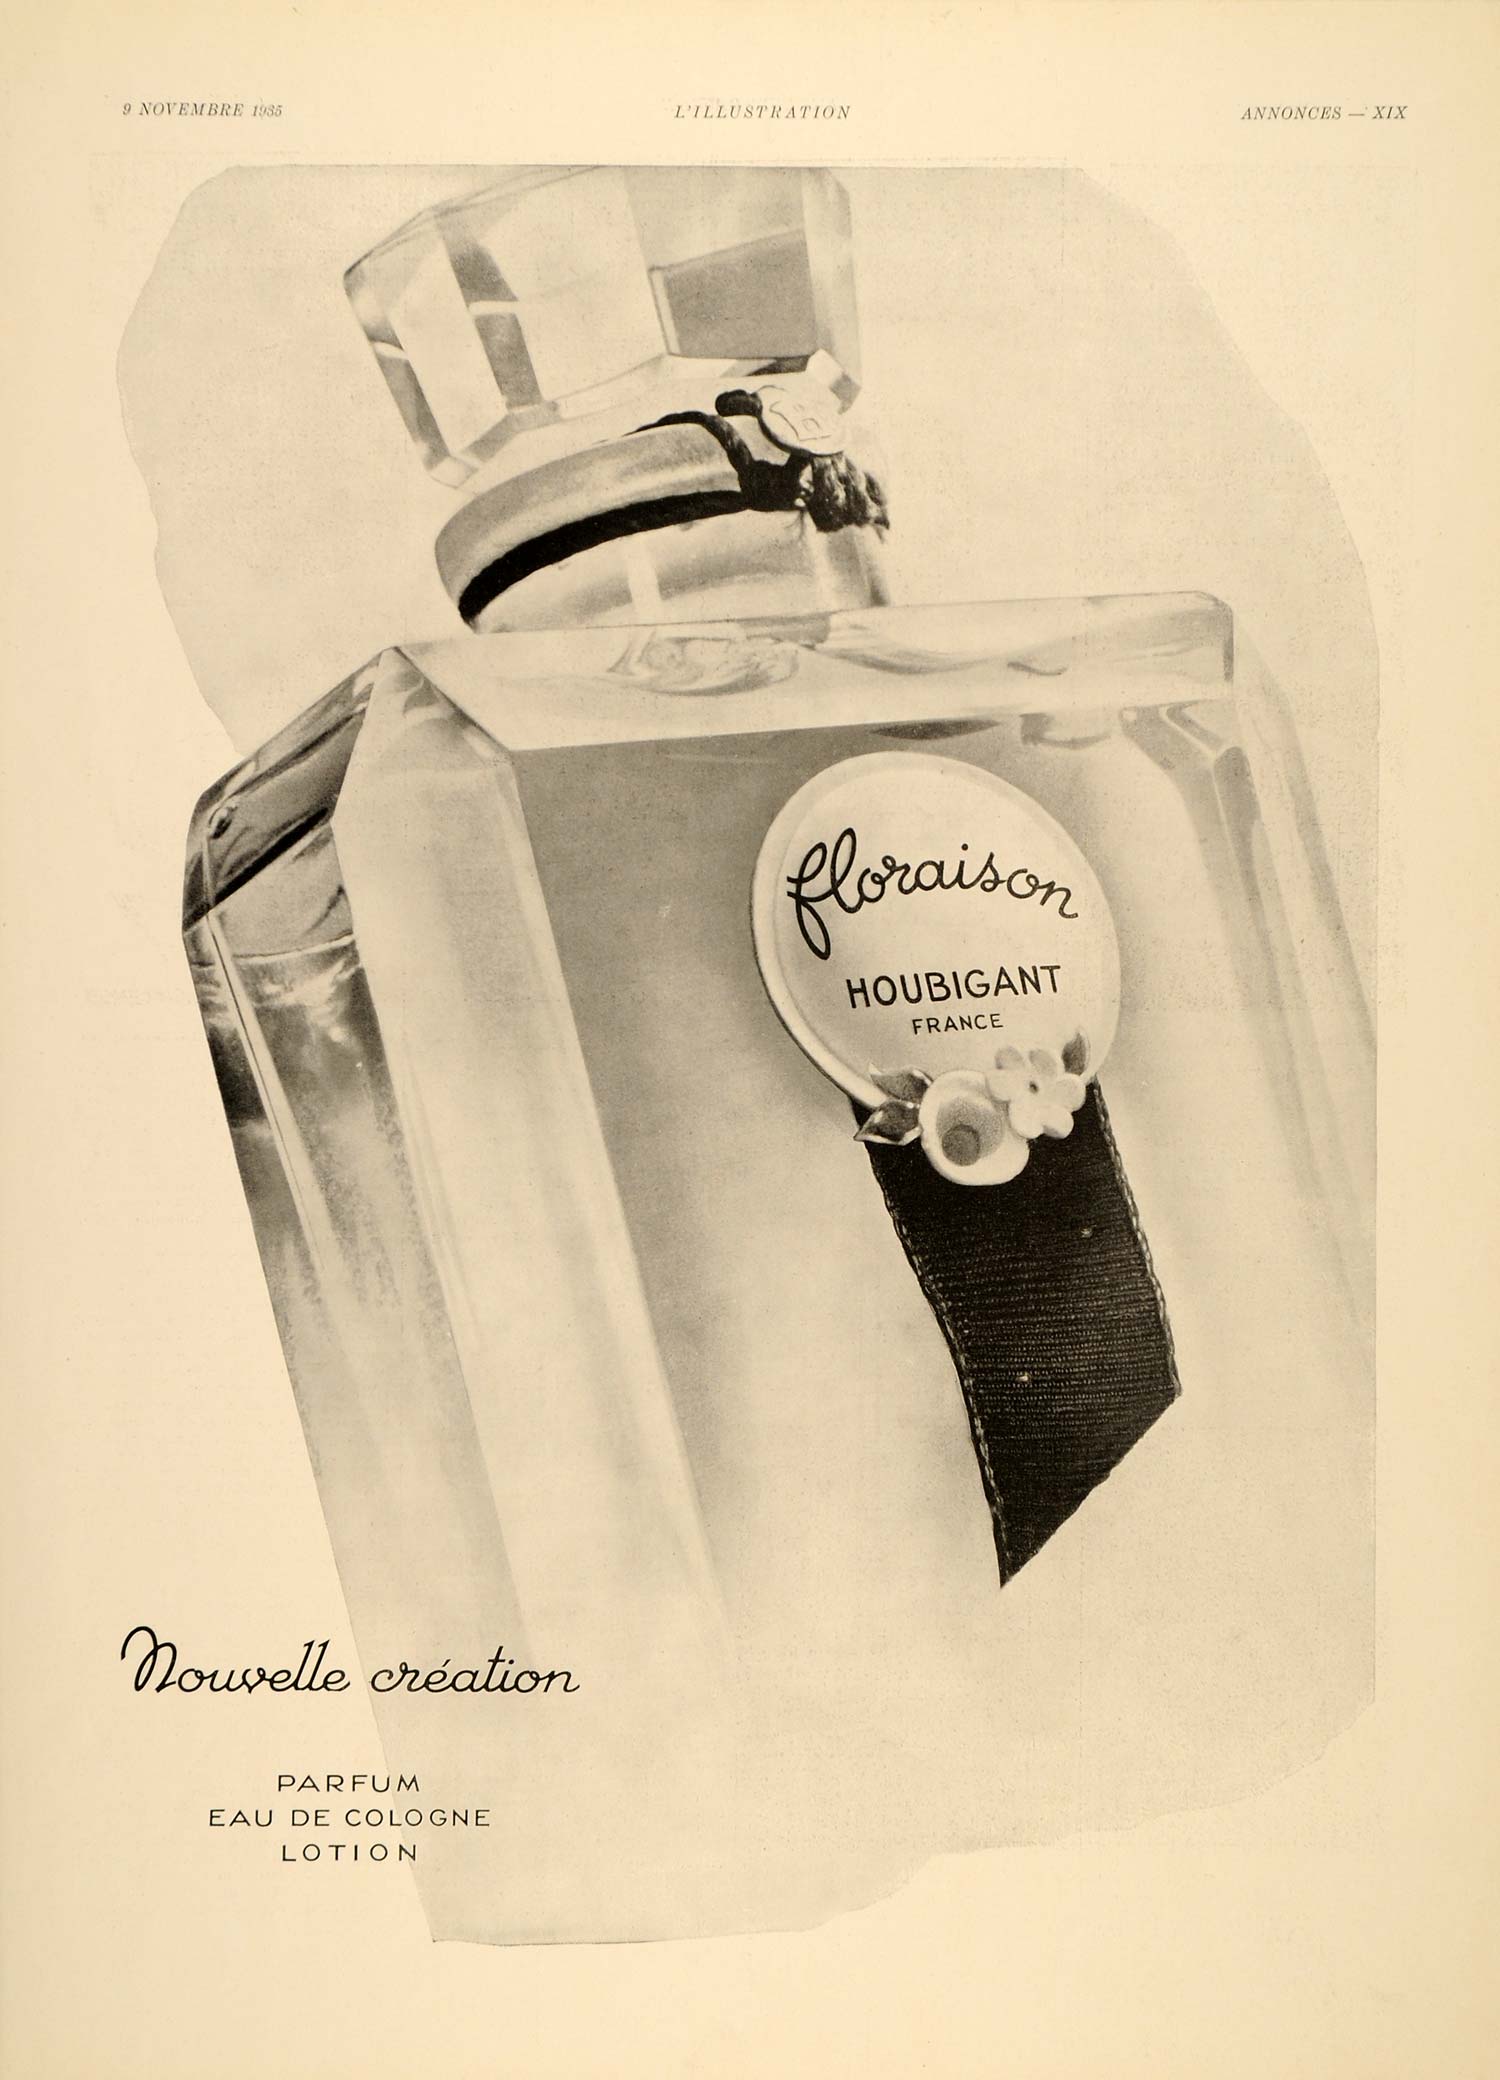 1935 Ad French Floraison Houbigant Parfum Bottle Lotion - ORIGINAL ILL3